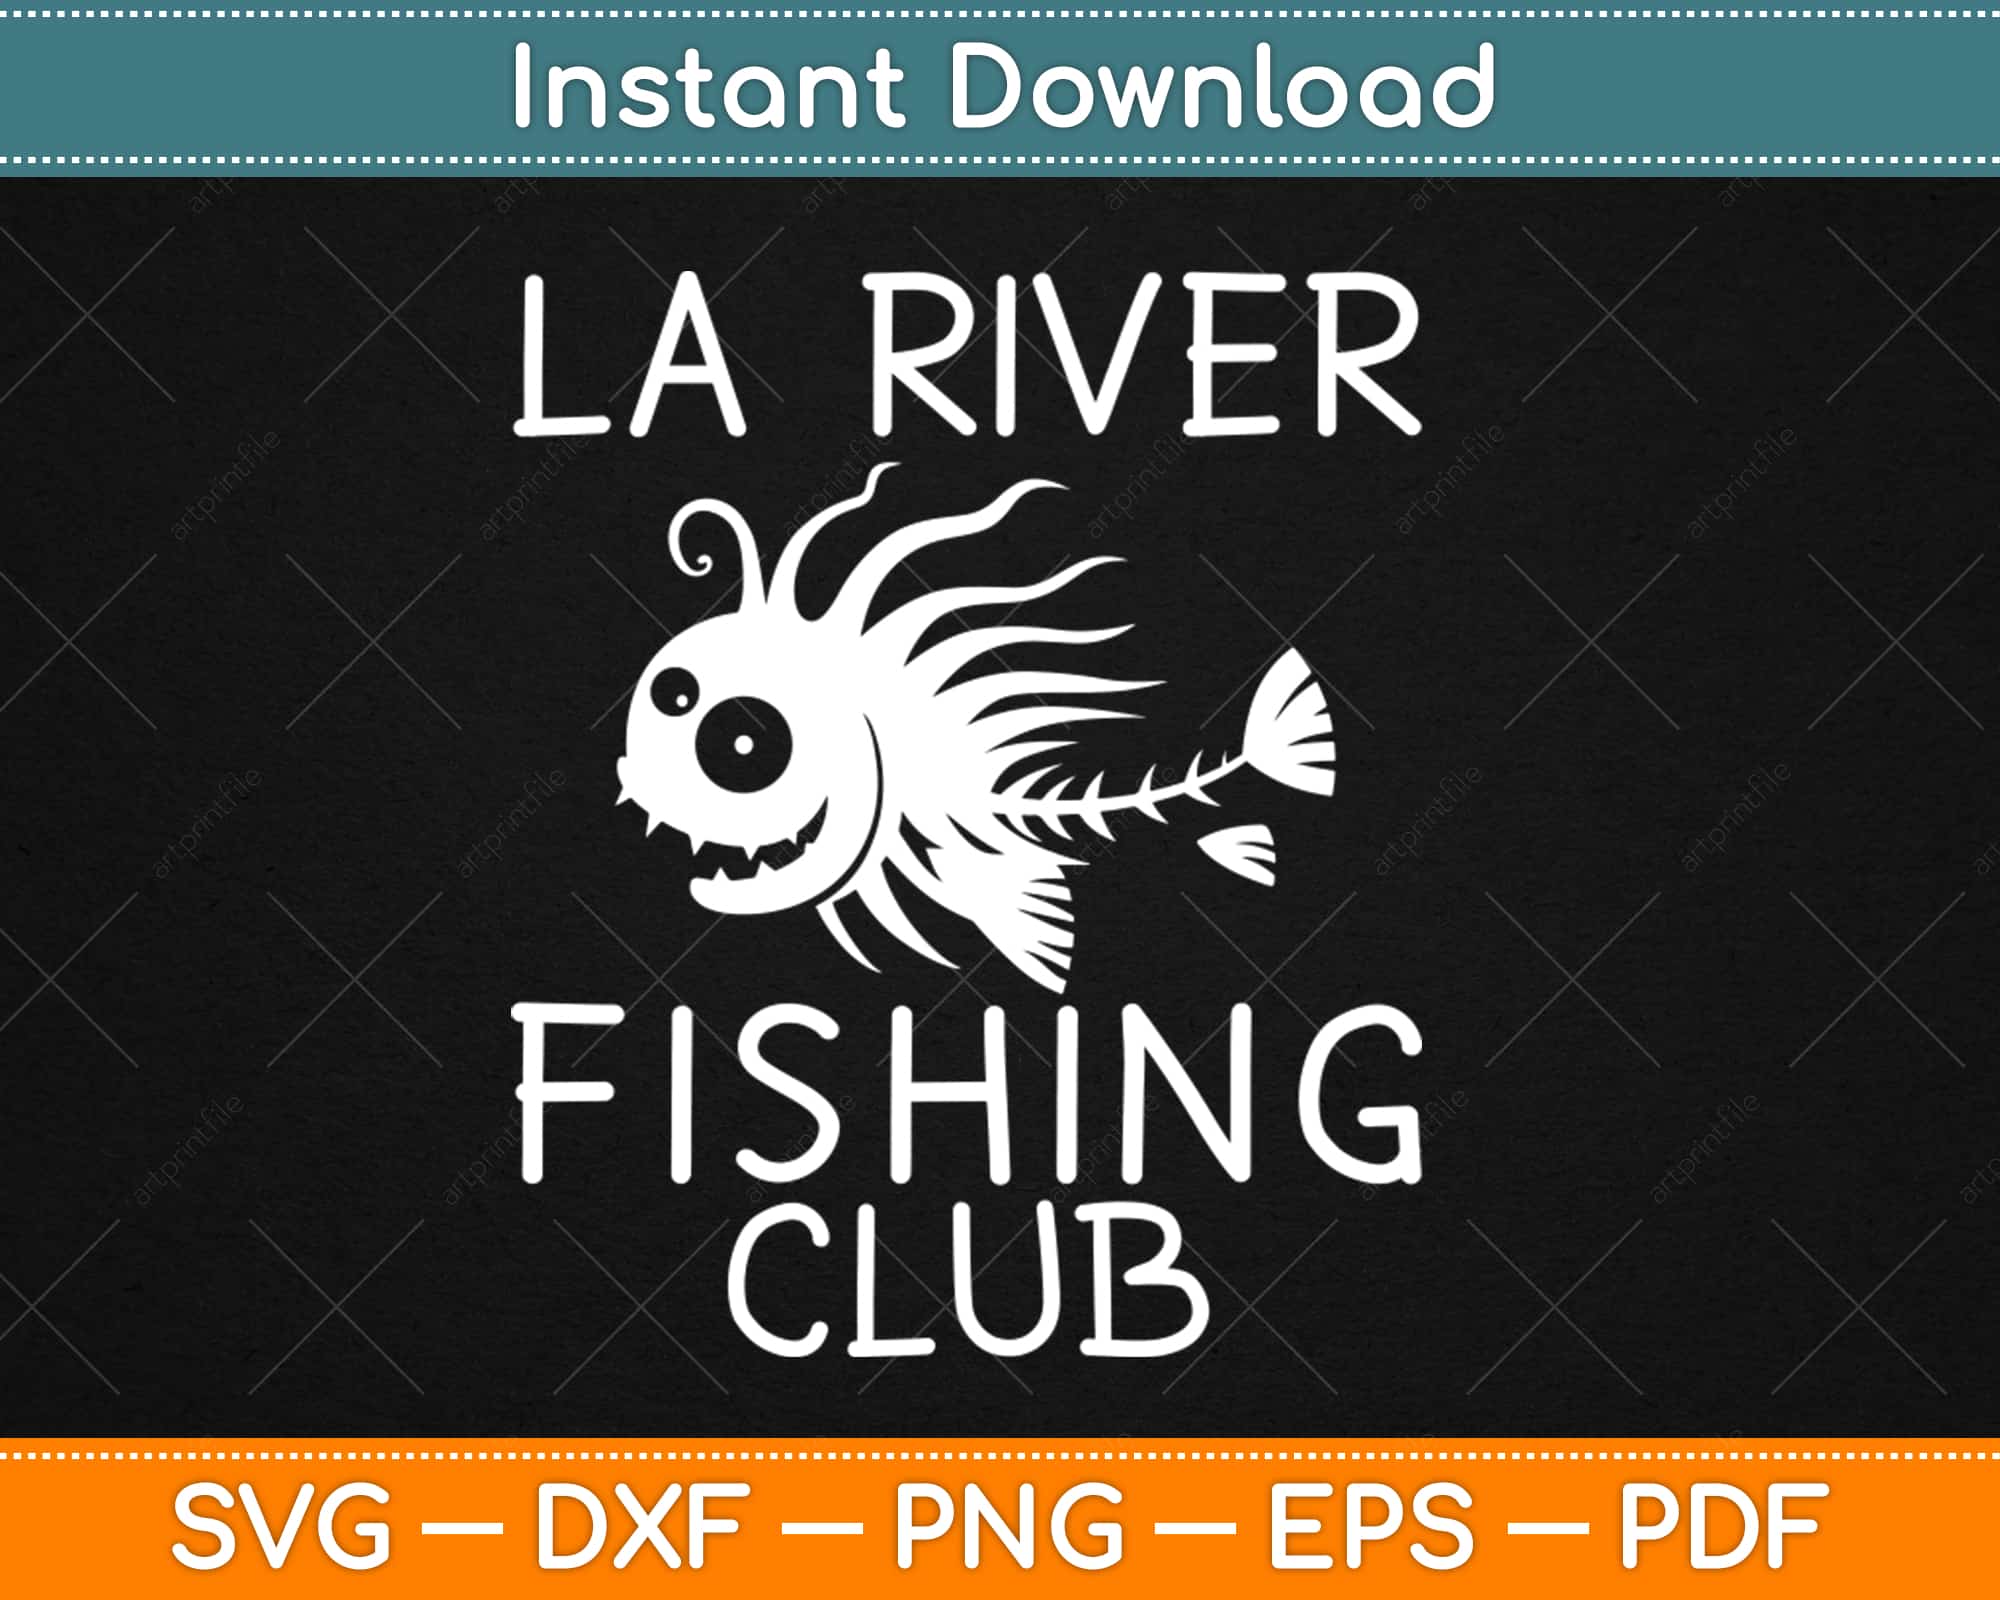 L.A. River Fishing Club three eyed fish Svg Png Design Cut File